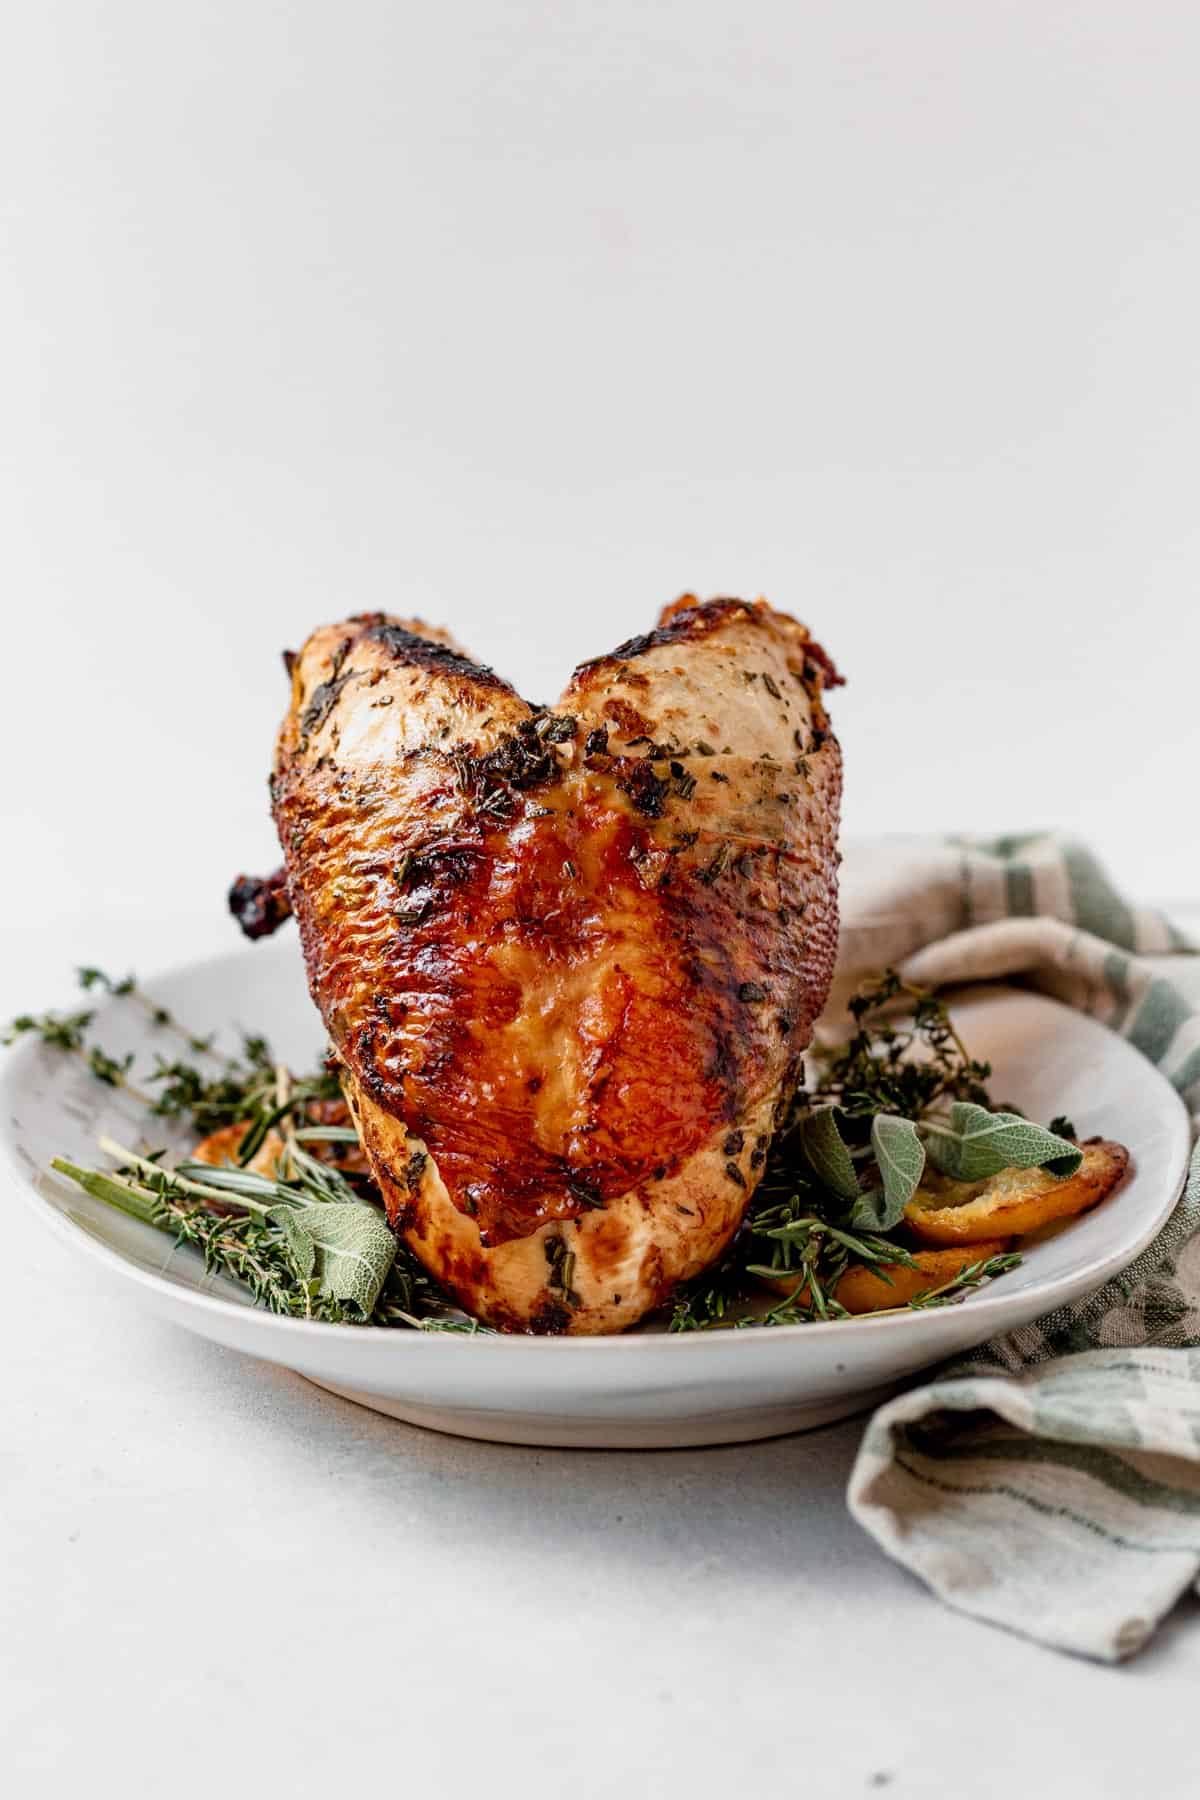 crispy air fryer turkey breast resting on a platter